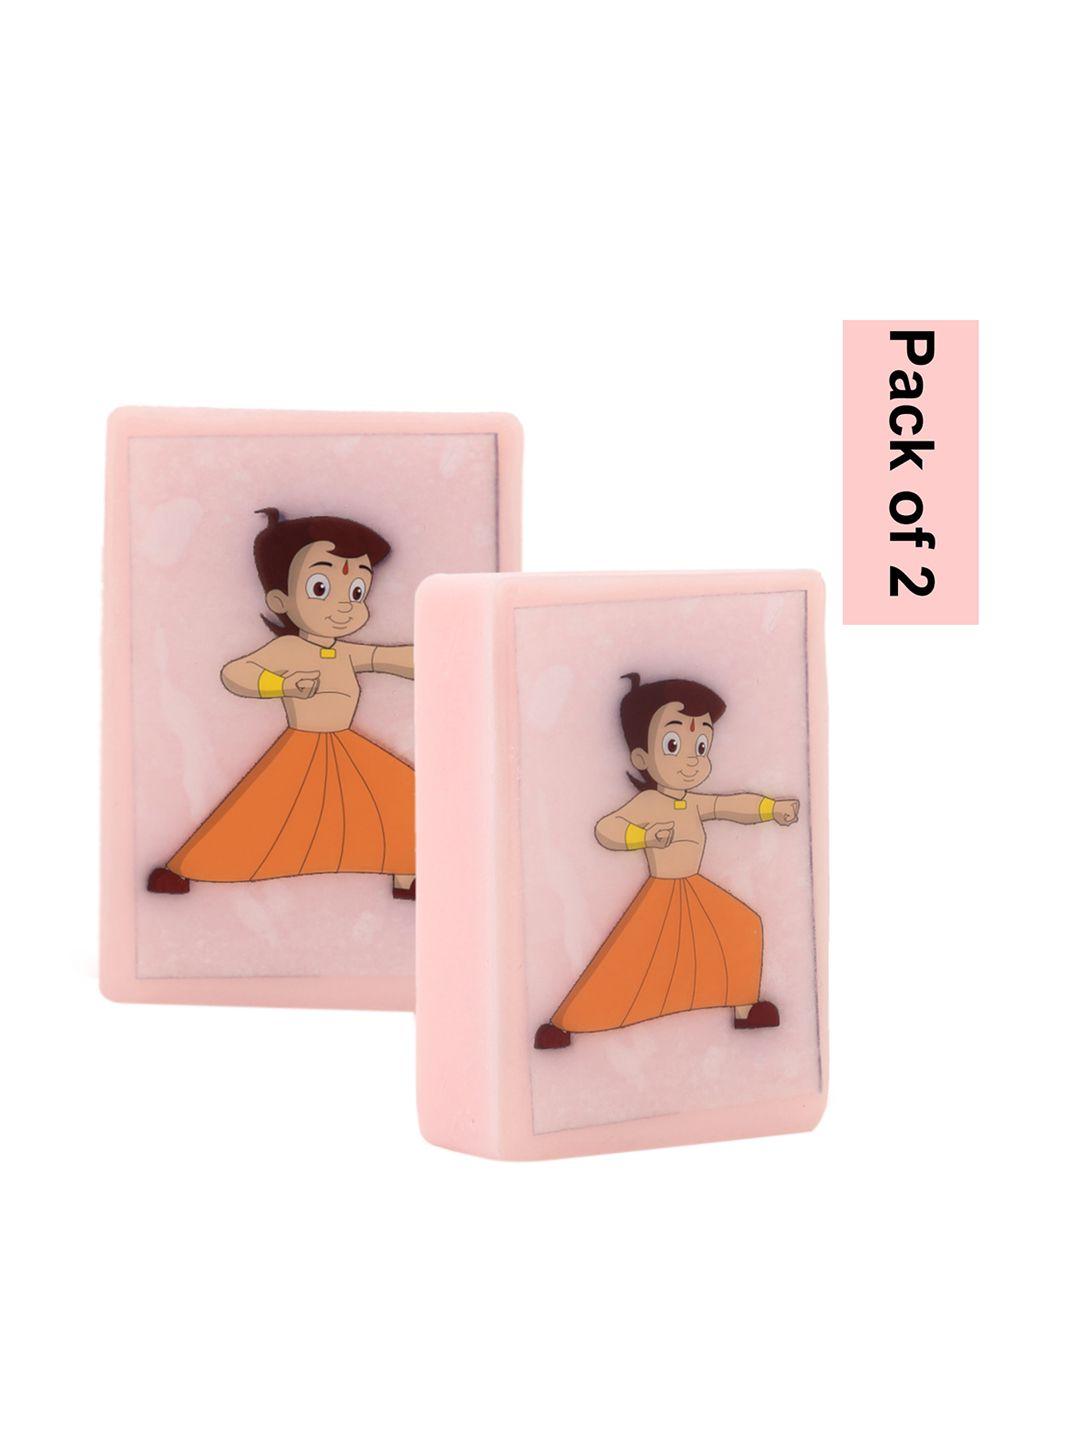 stay soapy set of 2 100% pure & natural cartoon chota bheem bathing soap - 120 g each